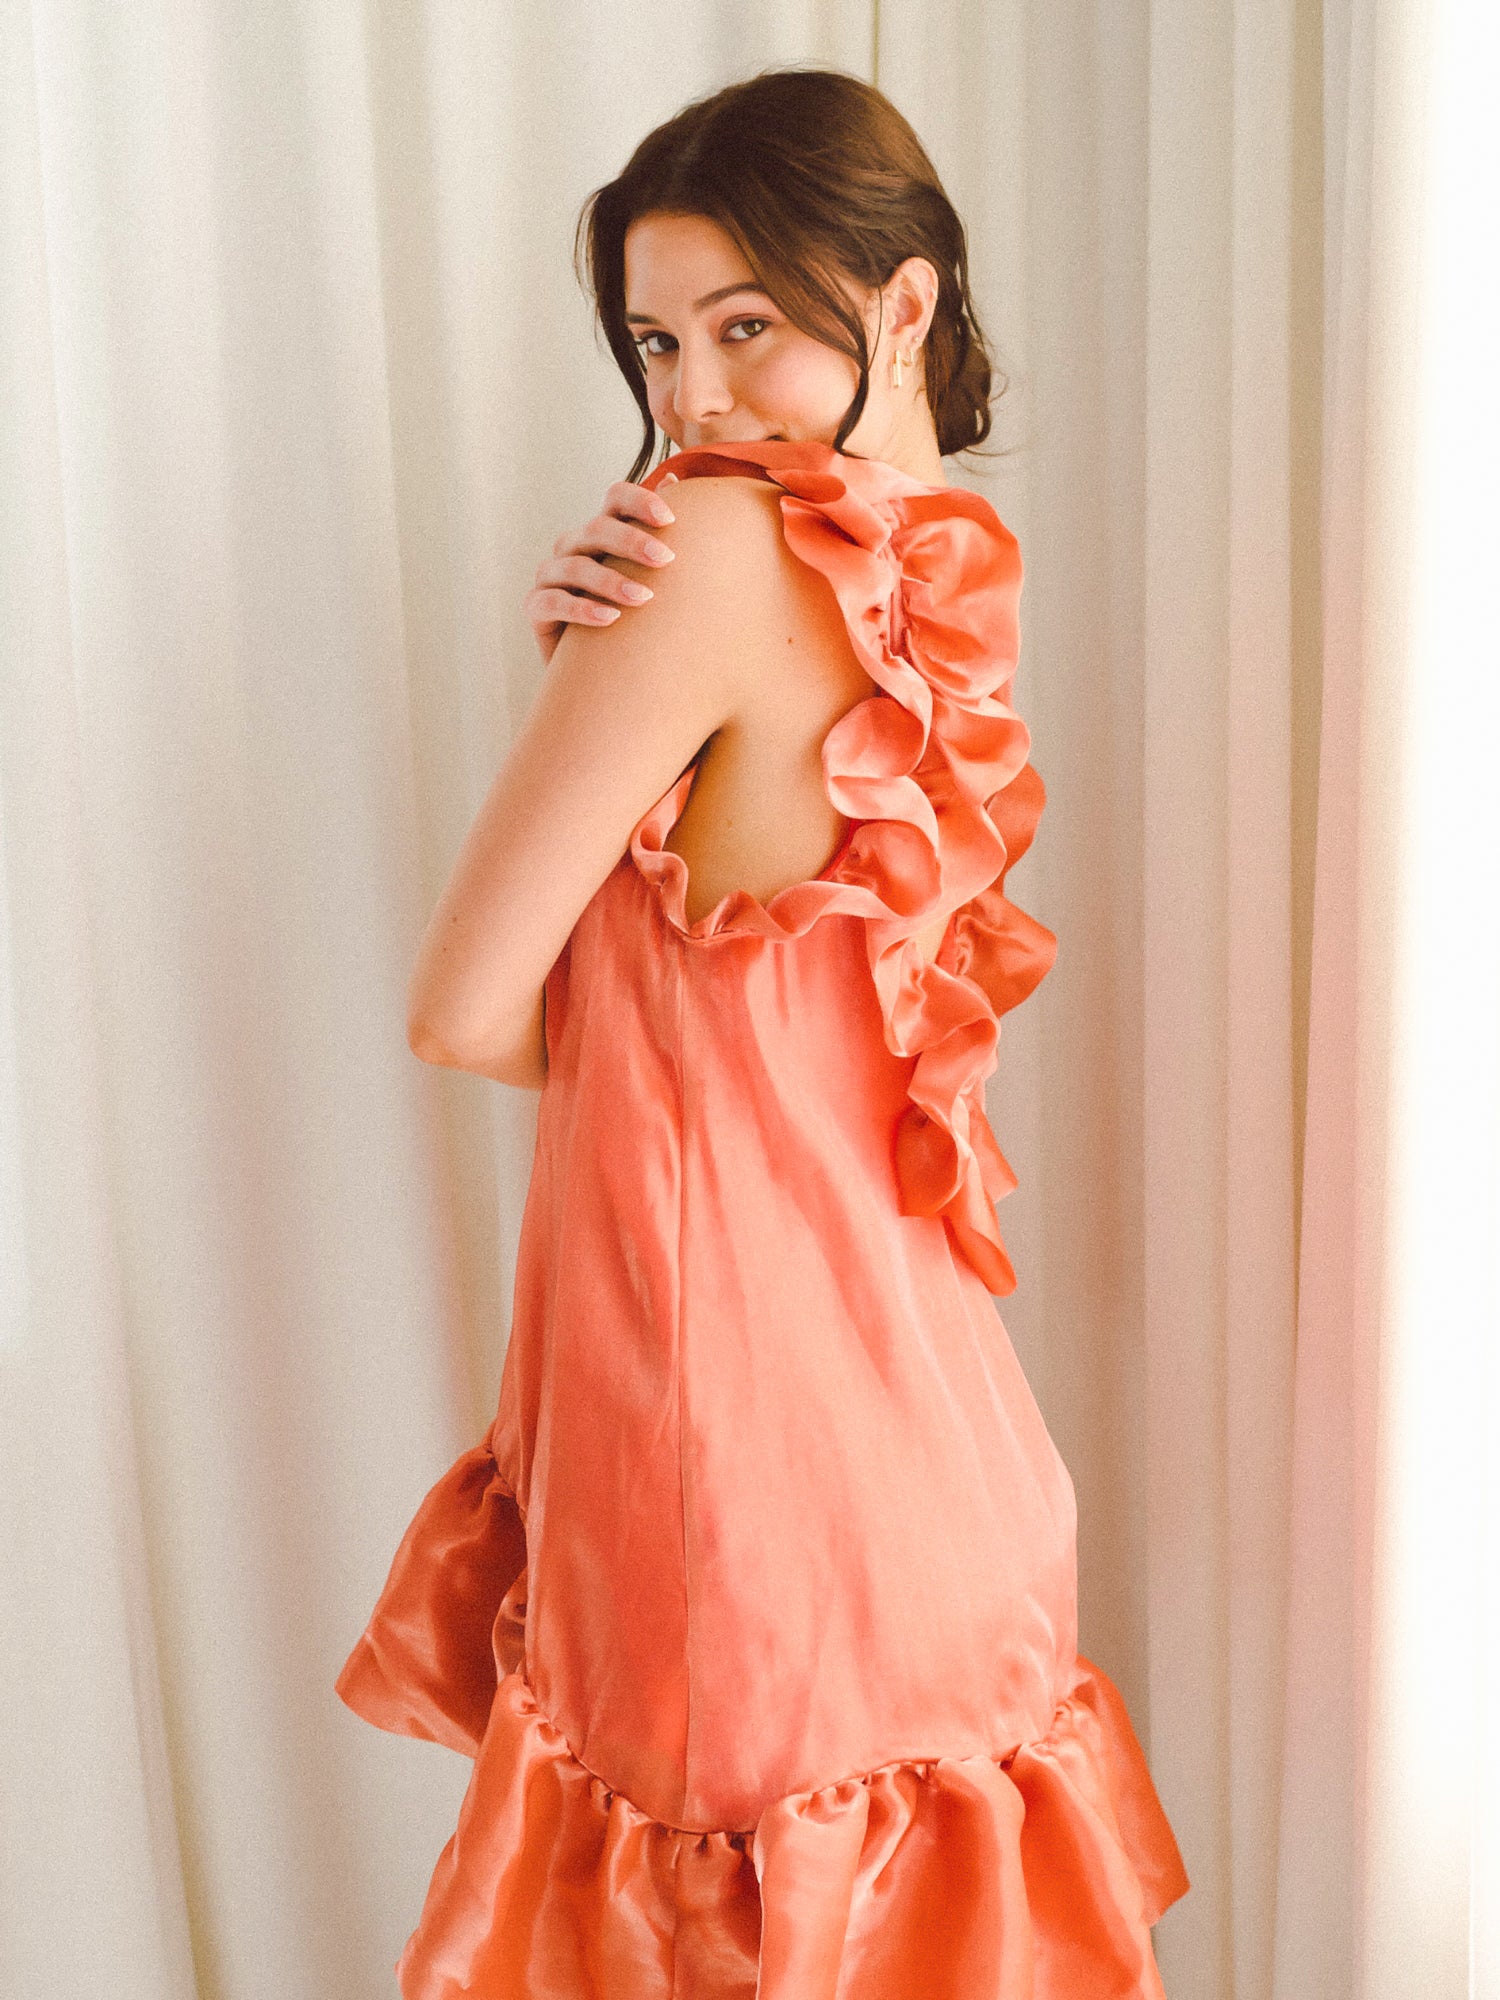 The Rose Shimmer Romance Mini Dress, Dress, Maison Amory - Ivory Sheep Collection Limited